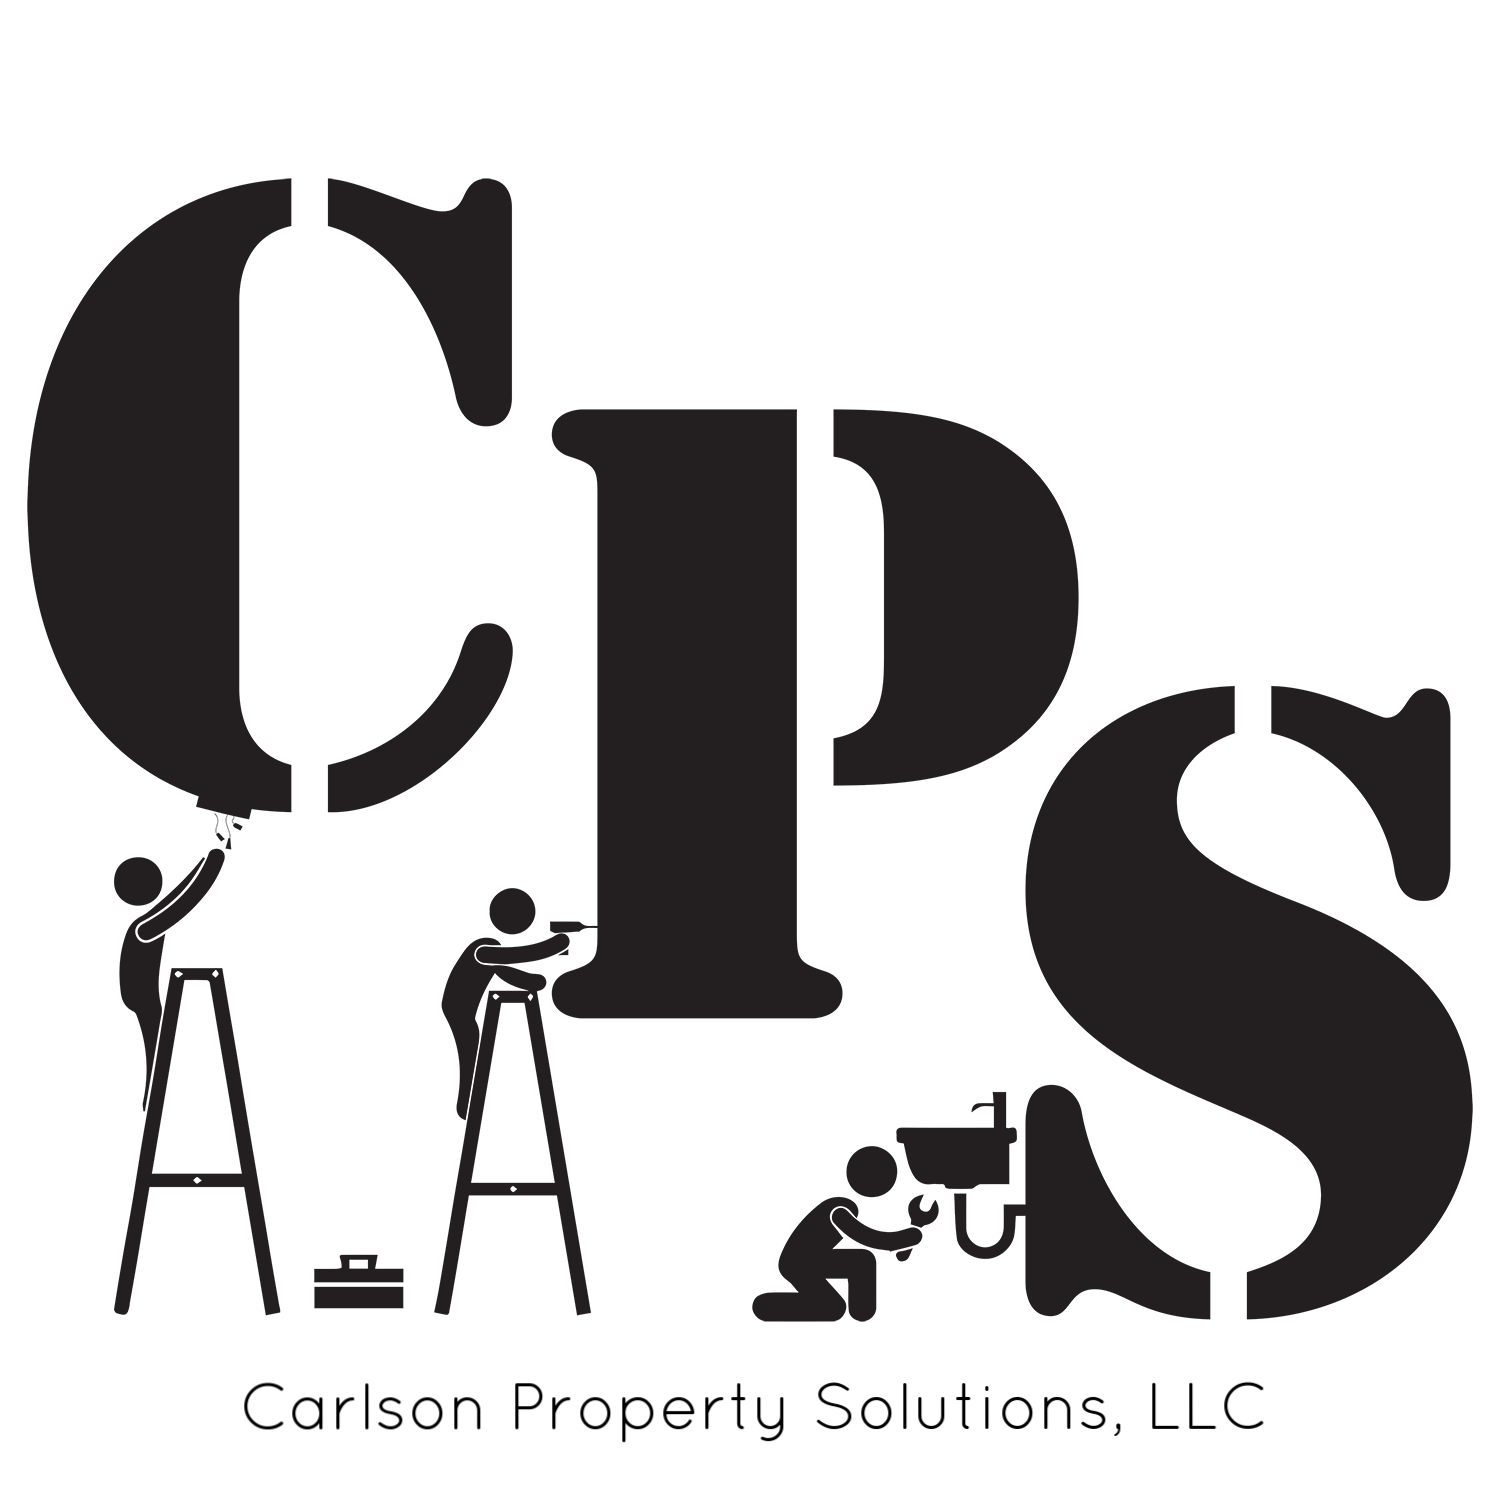 Carlson Property Solutions, LLC